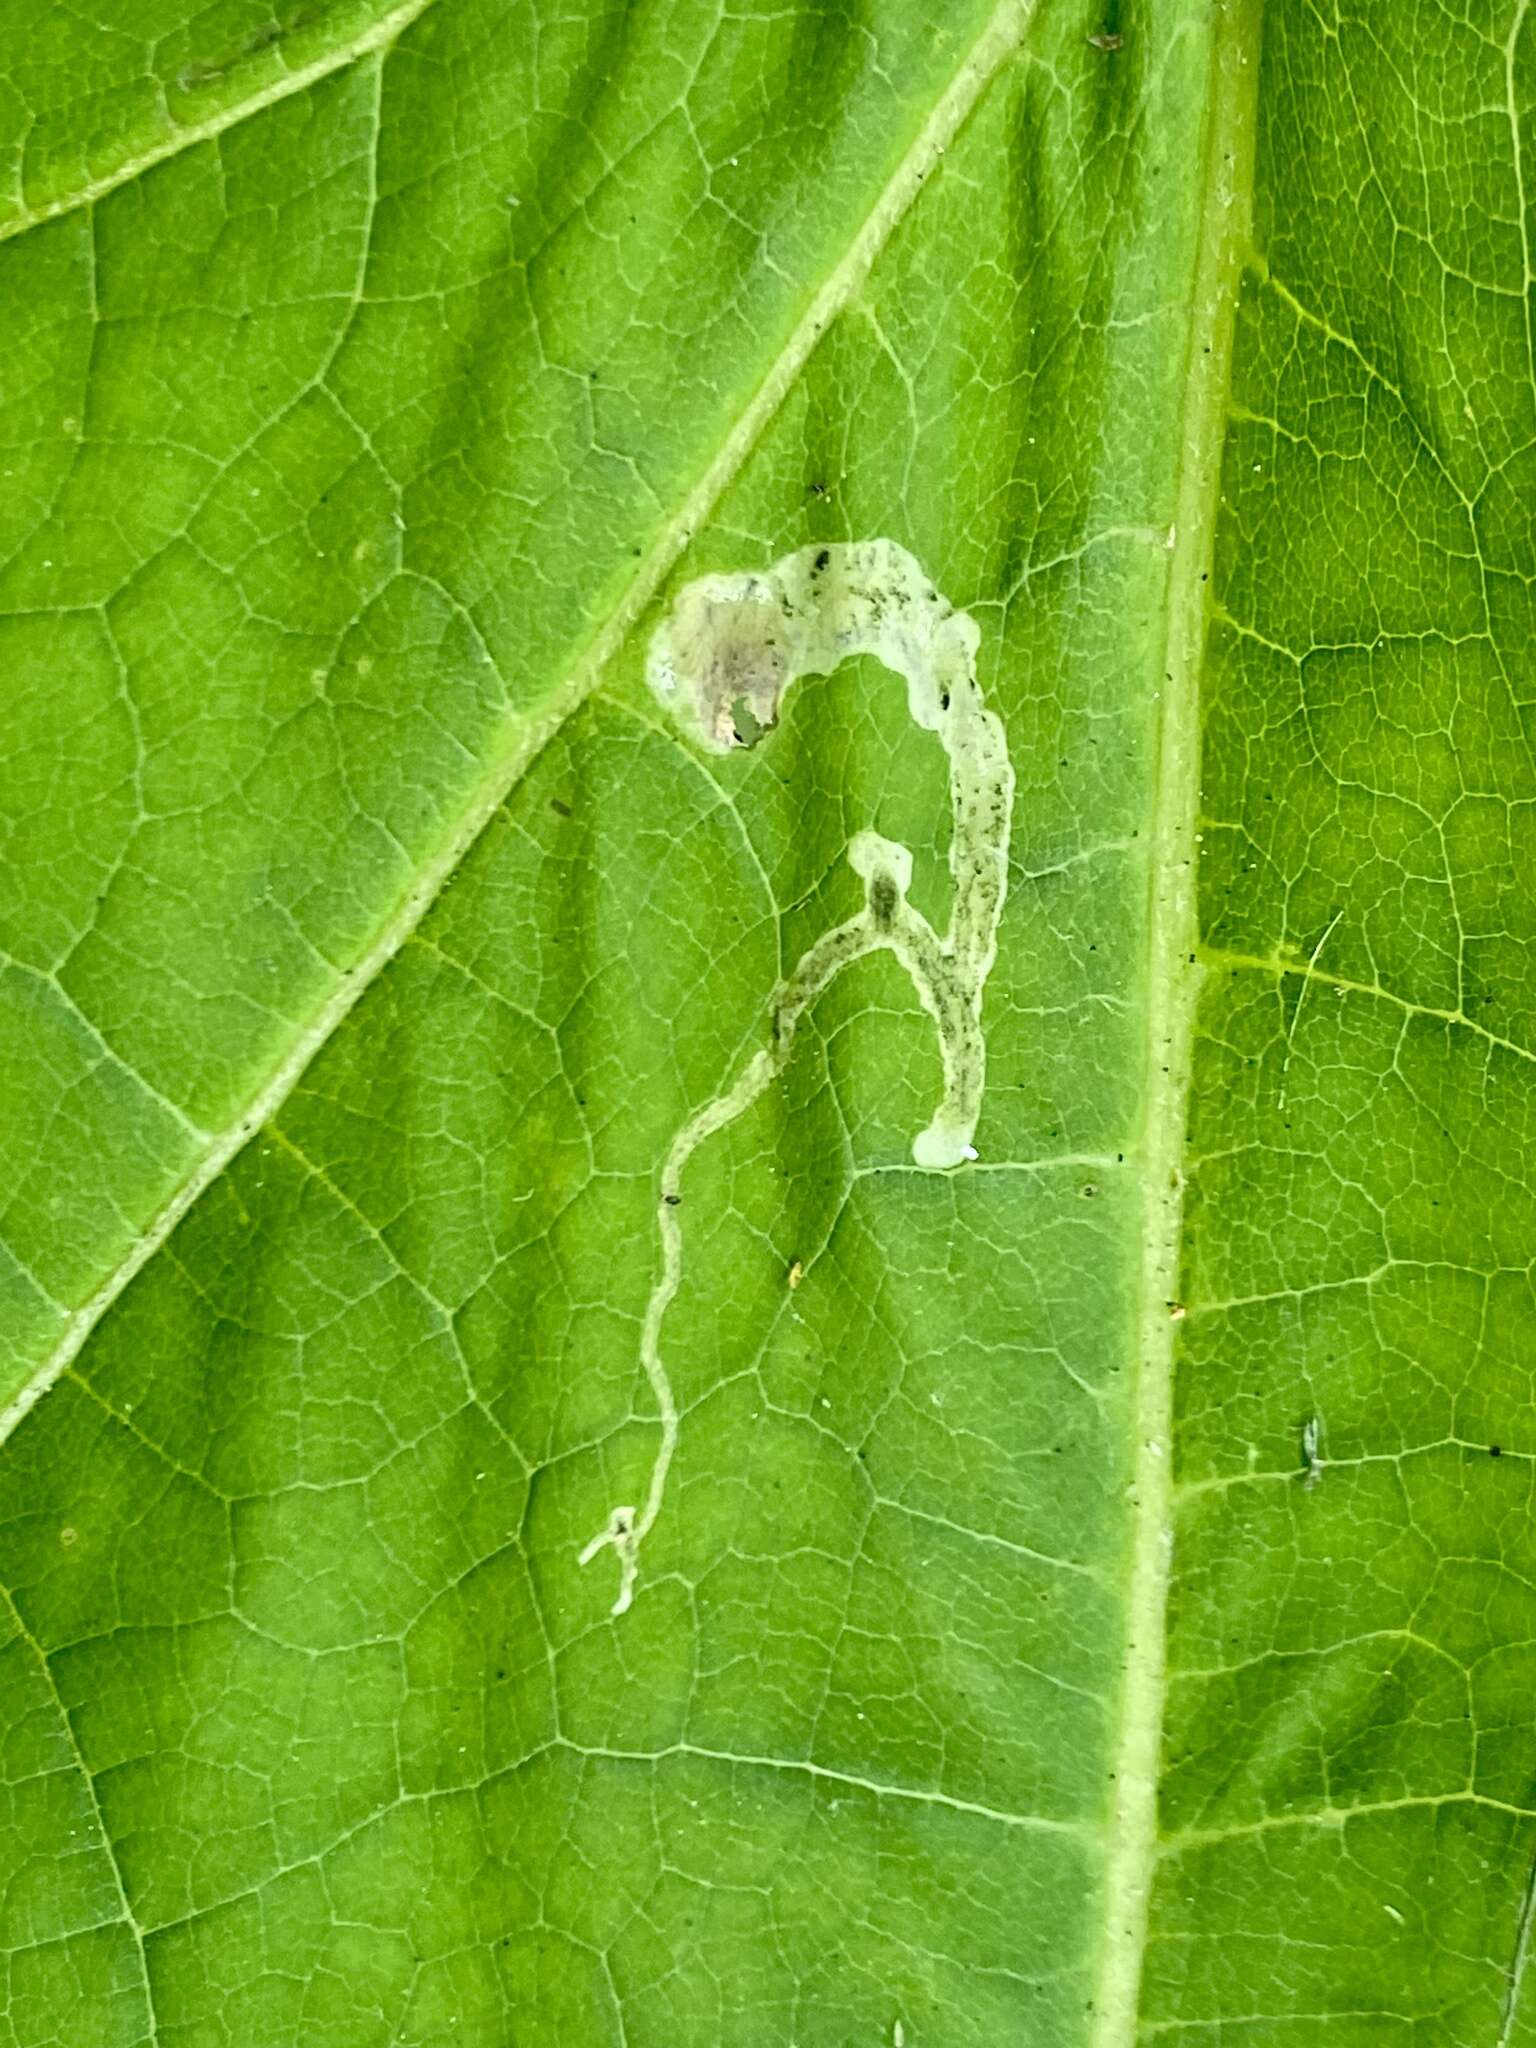 Image of Amauromyza pleuralis (Malloch 1914)